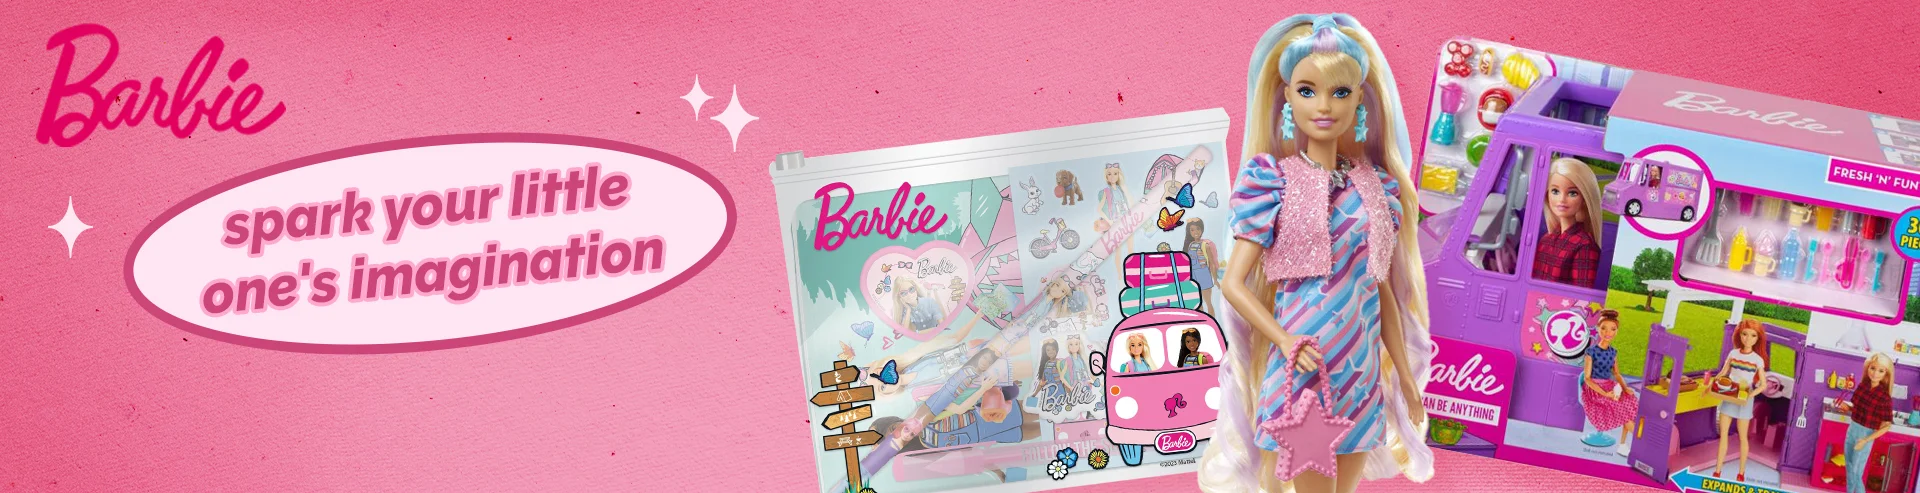 VM-Hero-Barbie-Merchandise-Qatar-1920x493.webp